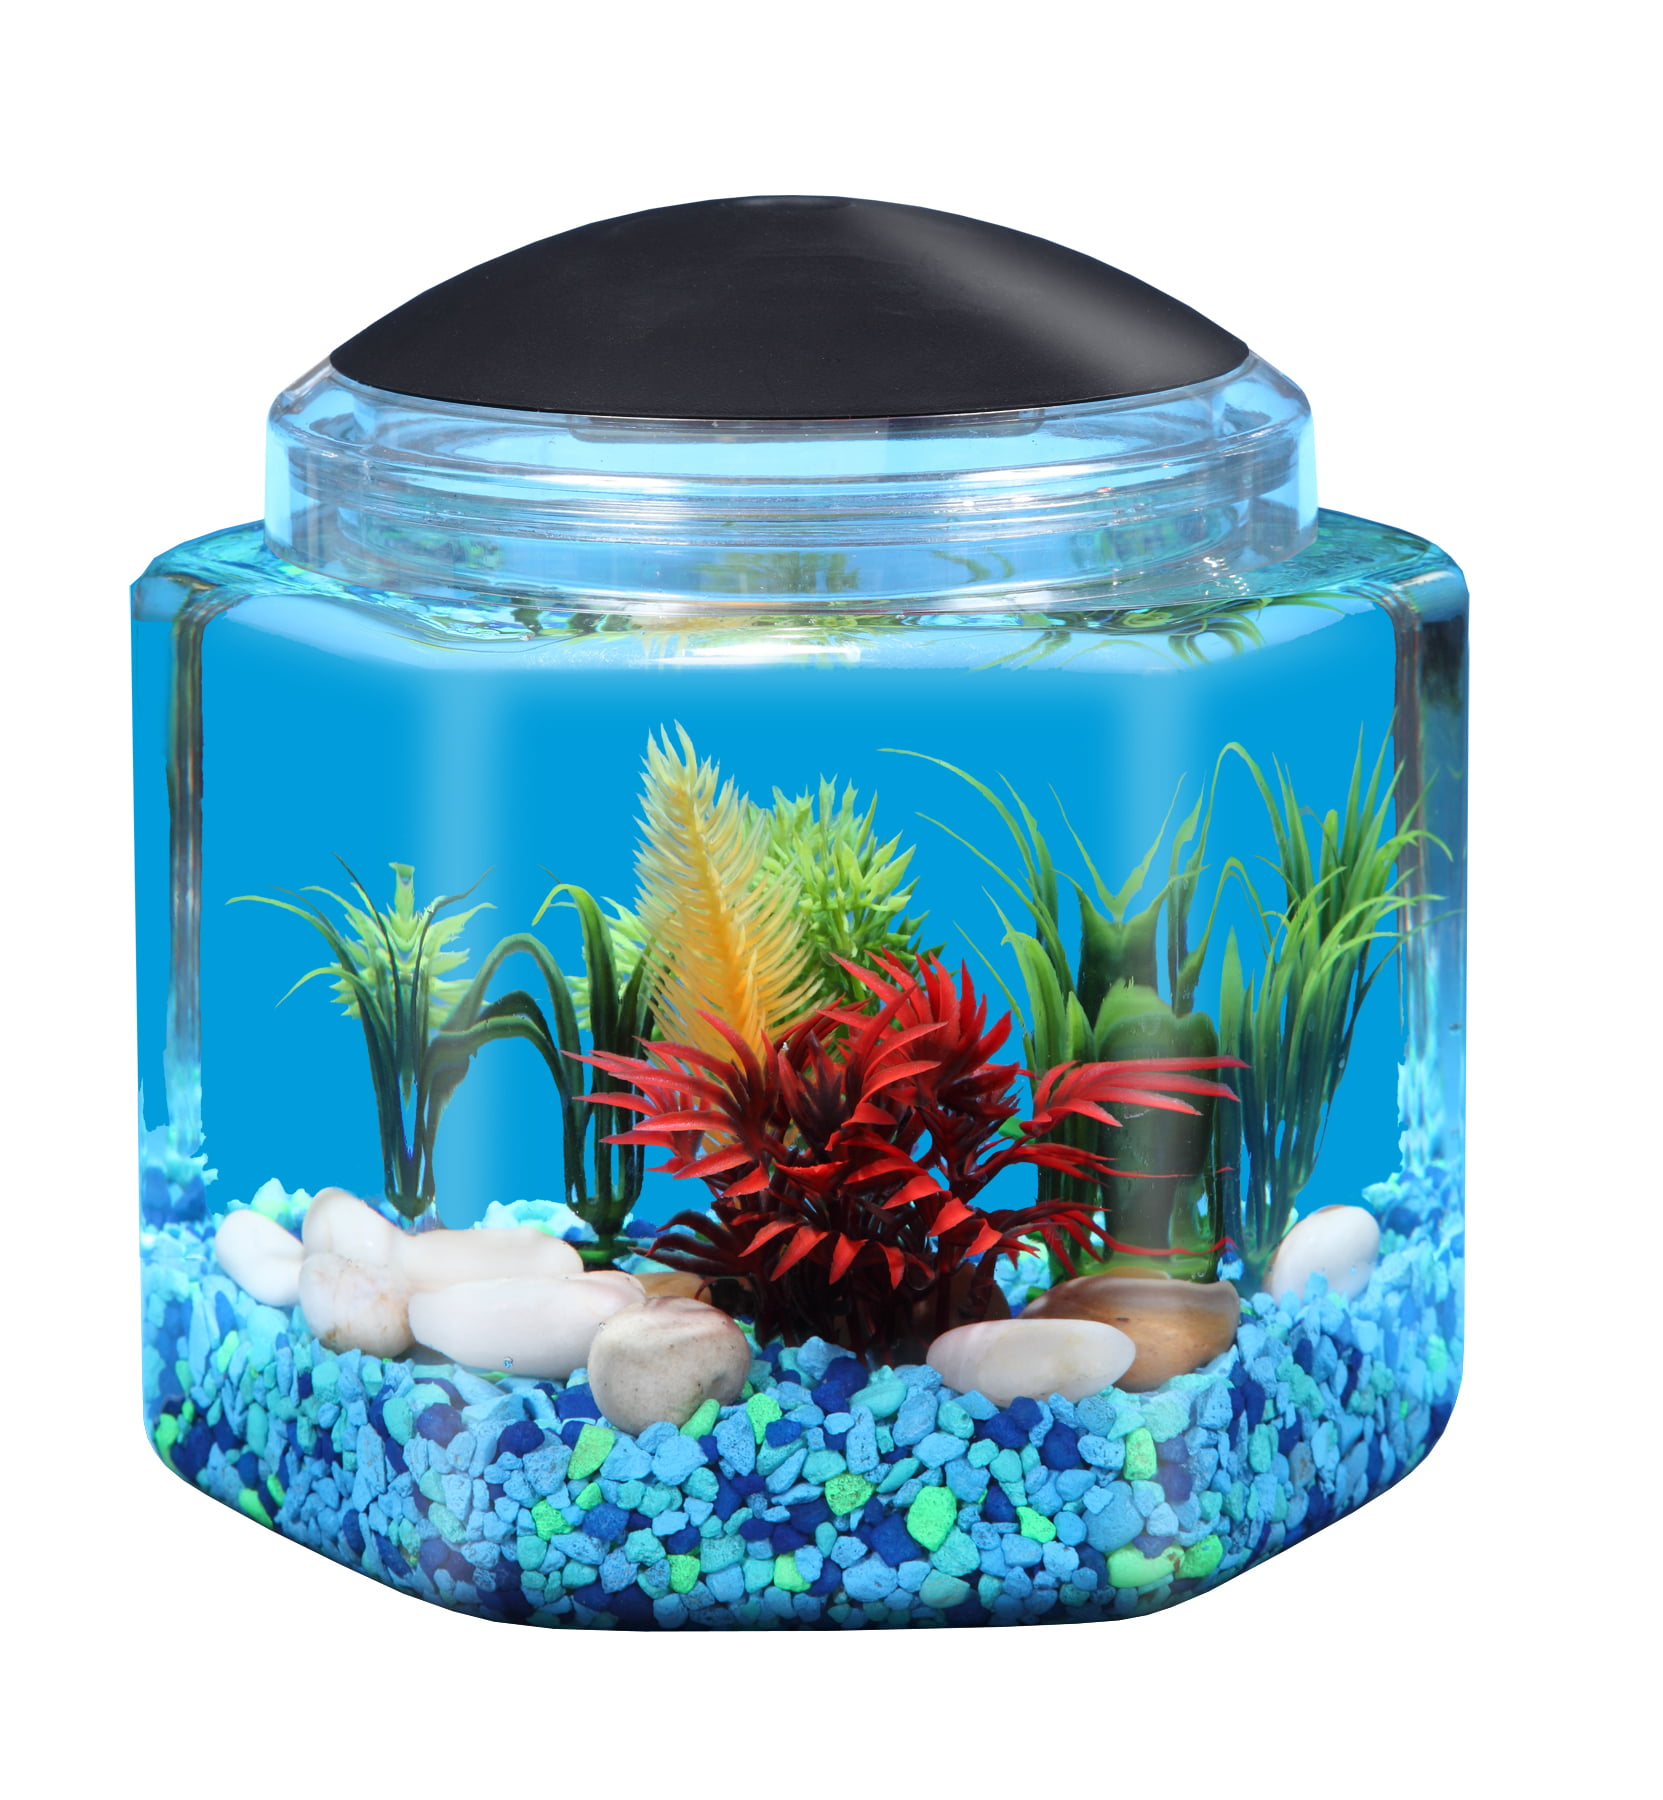 Buy Hawkeye 1-Gallon Betta Hex Fish Tank with LED Lighting at Walmart.com. 